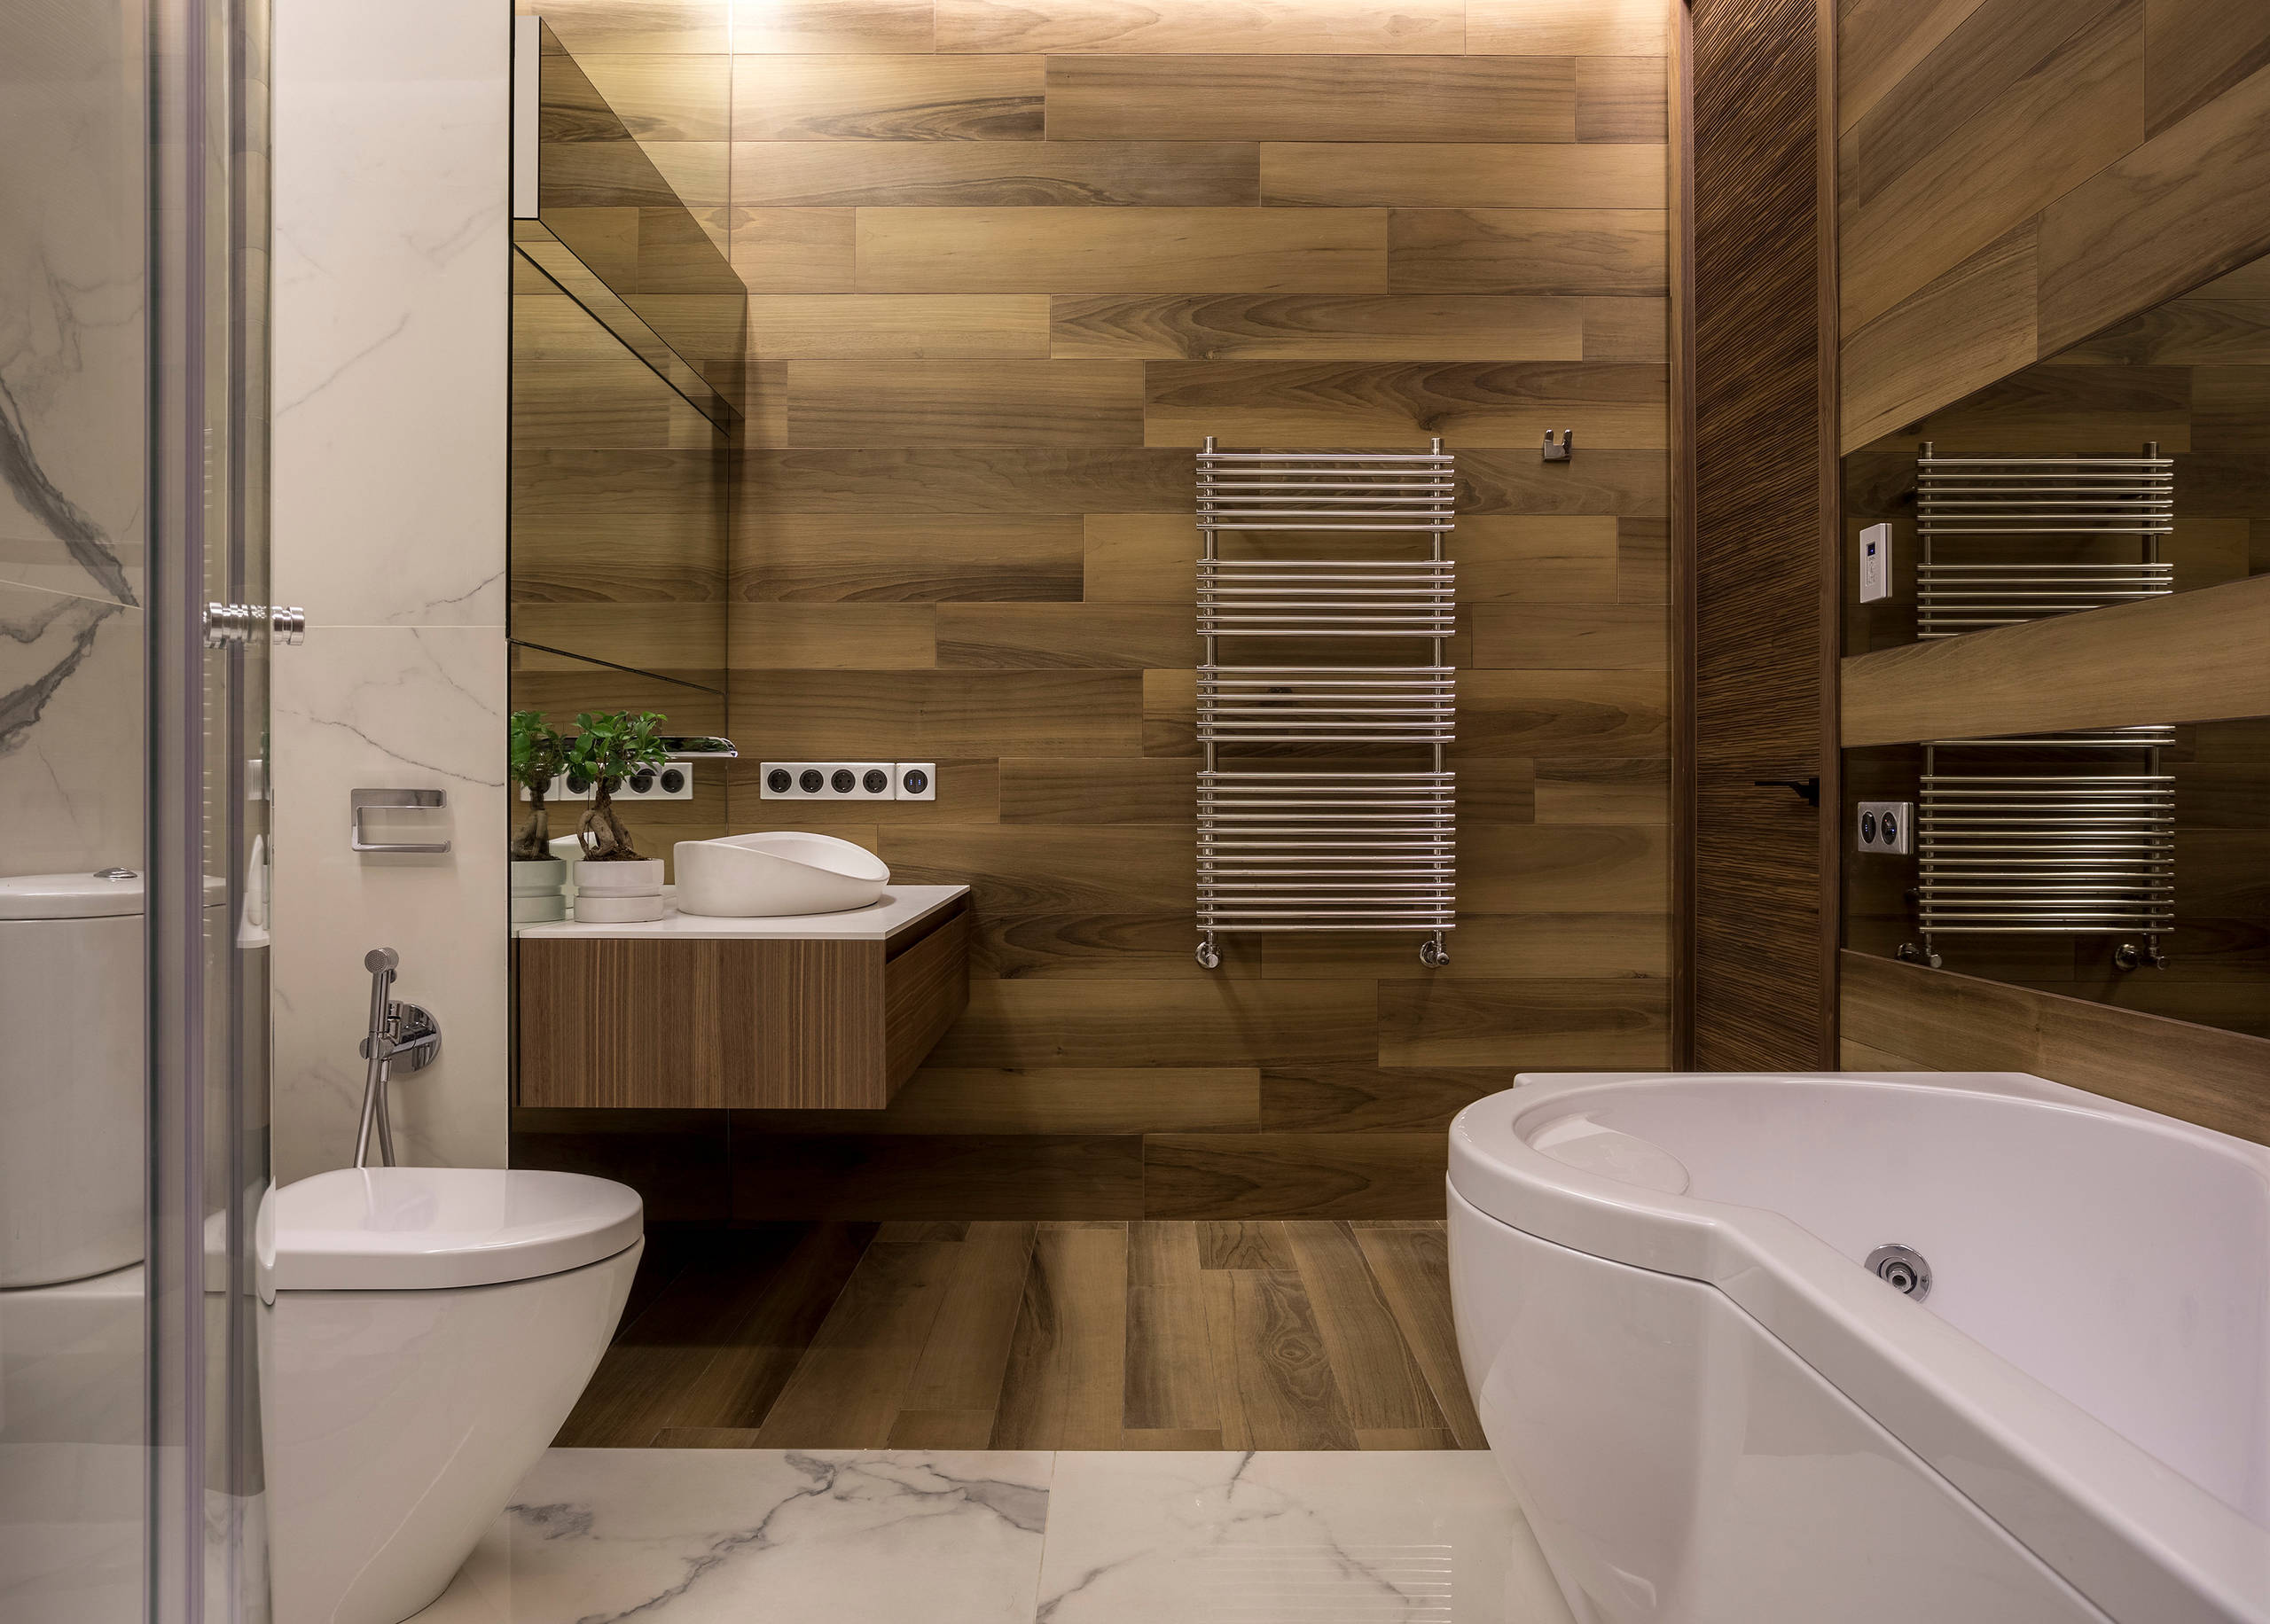 75 Bathroom with a Hot Tub Ideas You'll Love - February, 2022 | Houzz